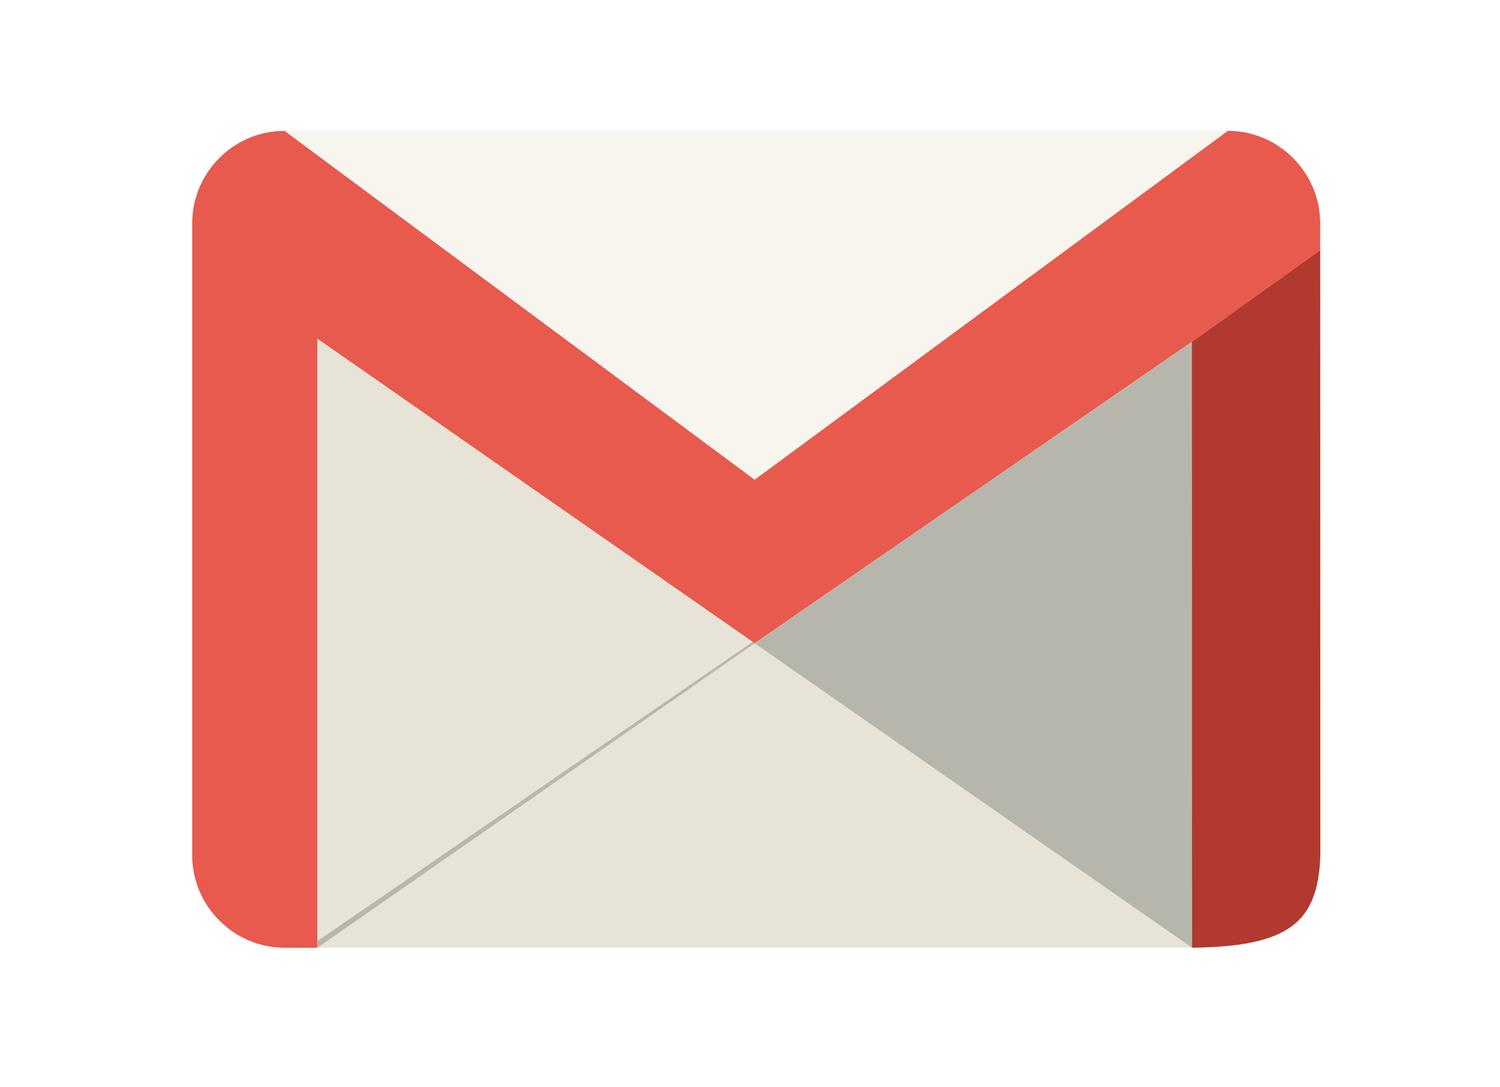 Ips gmail com. Значок почты. Gmail картинка. Значок гмаил. E-mail иконка.